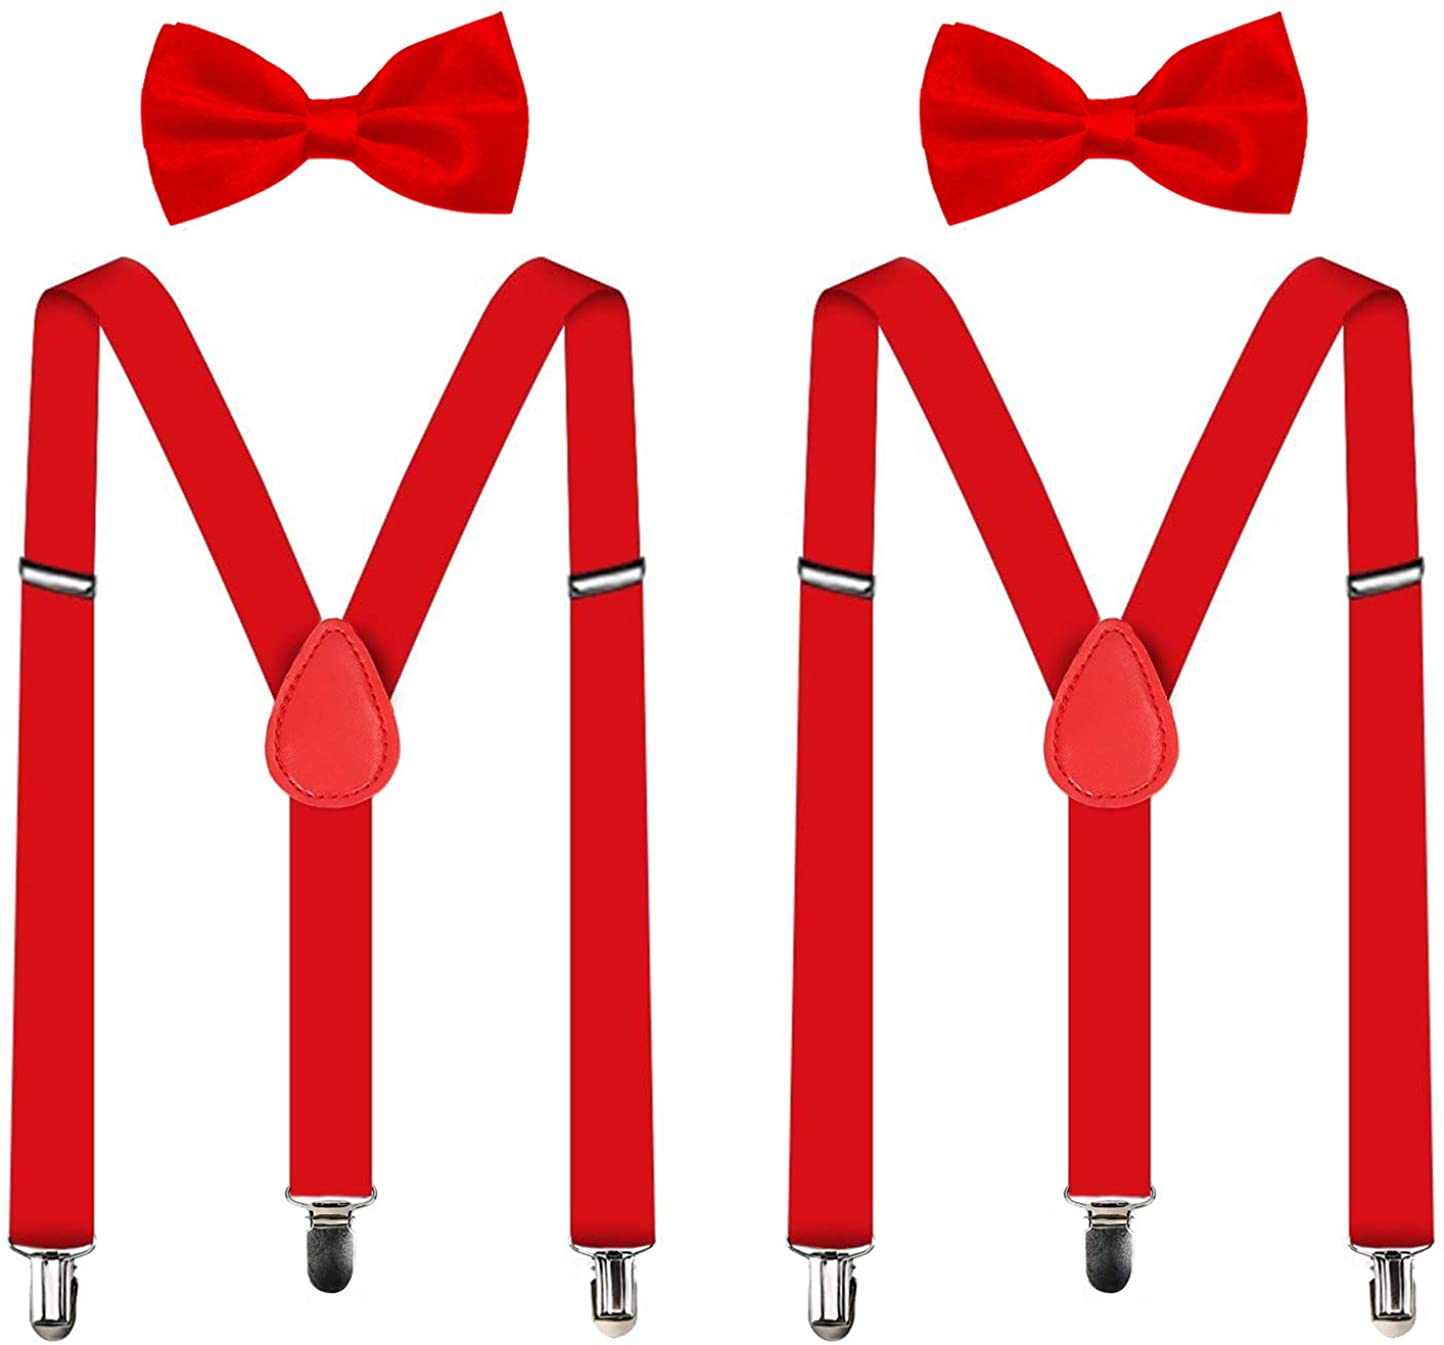 Gray-Leather Suspenders For Men,Women Adjustable Suspends Bow Tie Set Solid Color Y Shape Women Adjustable Suspends Bow Tie Set Solid Color Y Shape